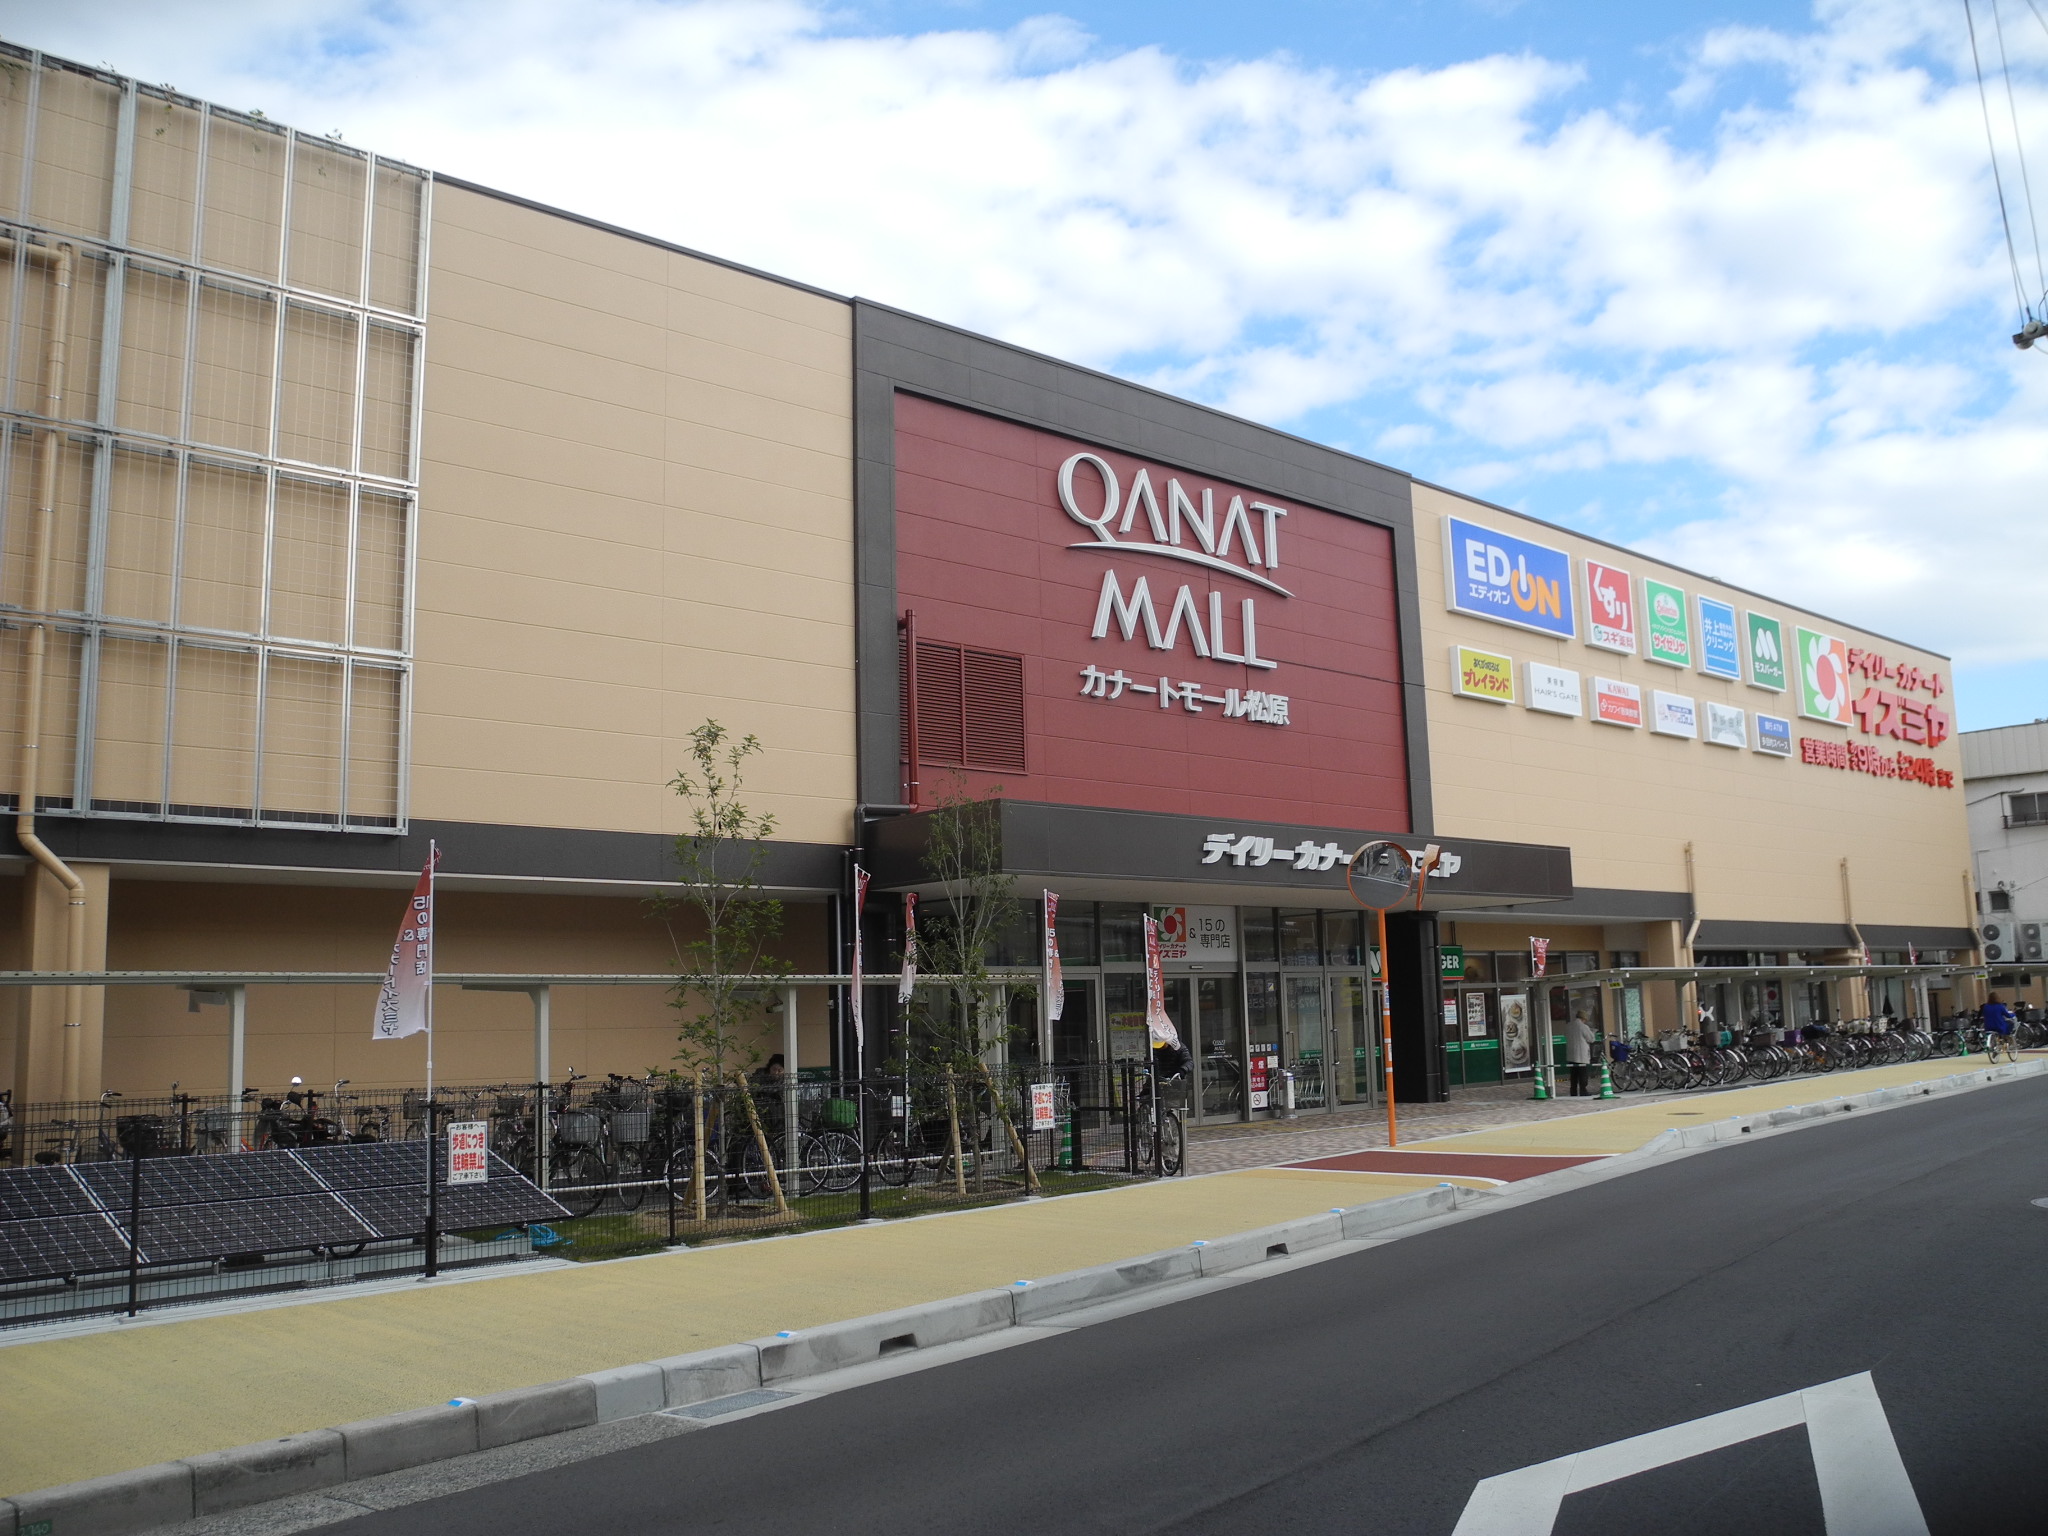 Shopping centre. 936m until qanat Mall Matsubara (shopping center)